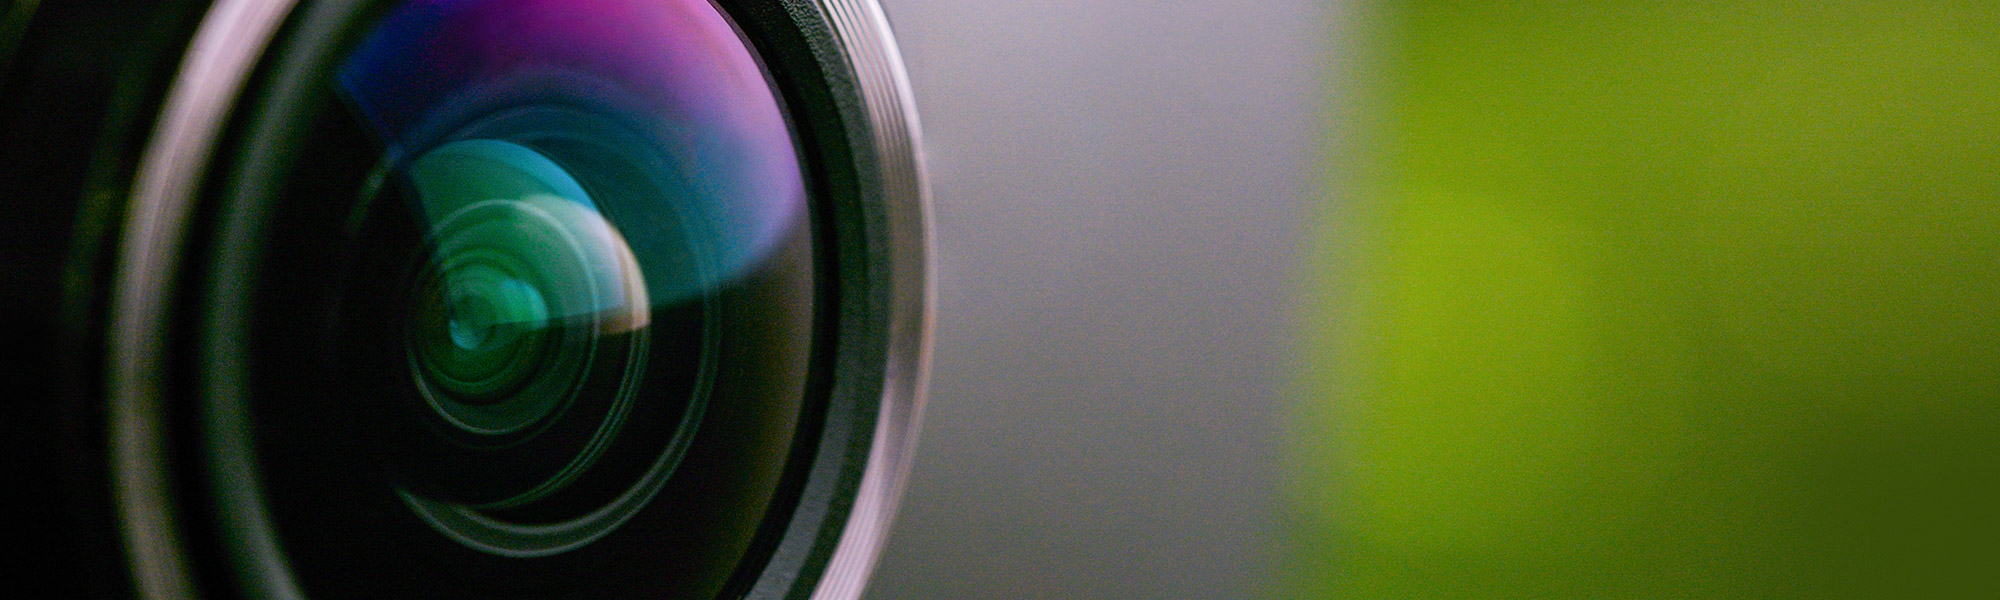 Video Camera Lens